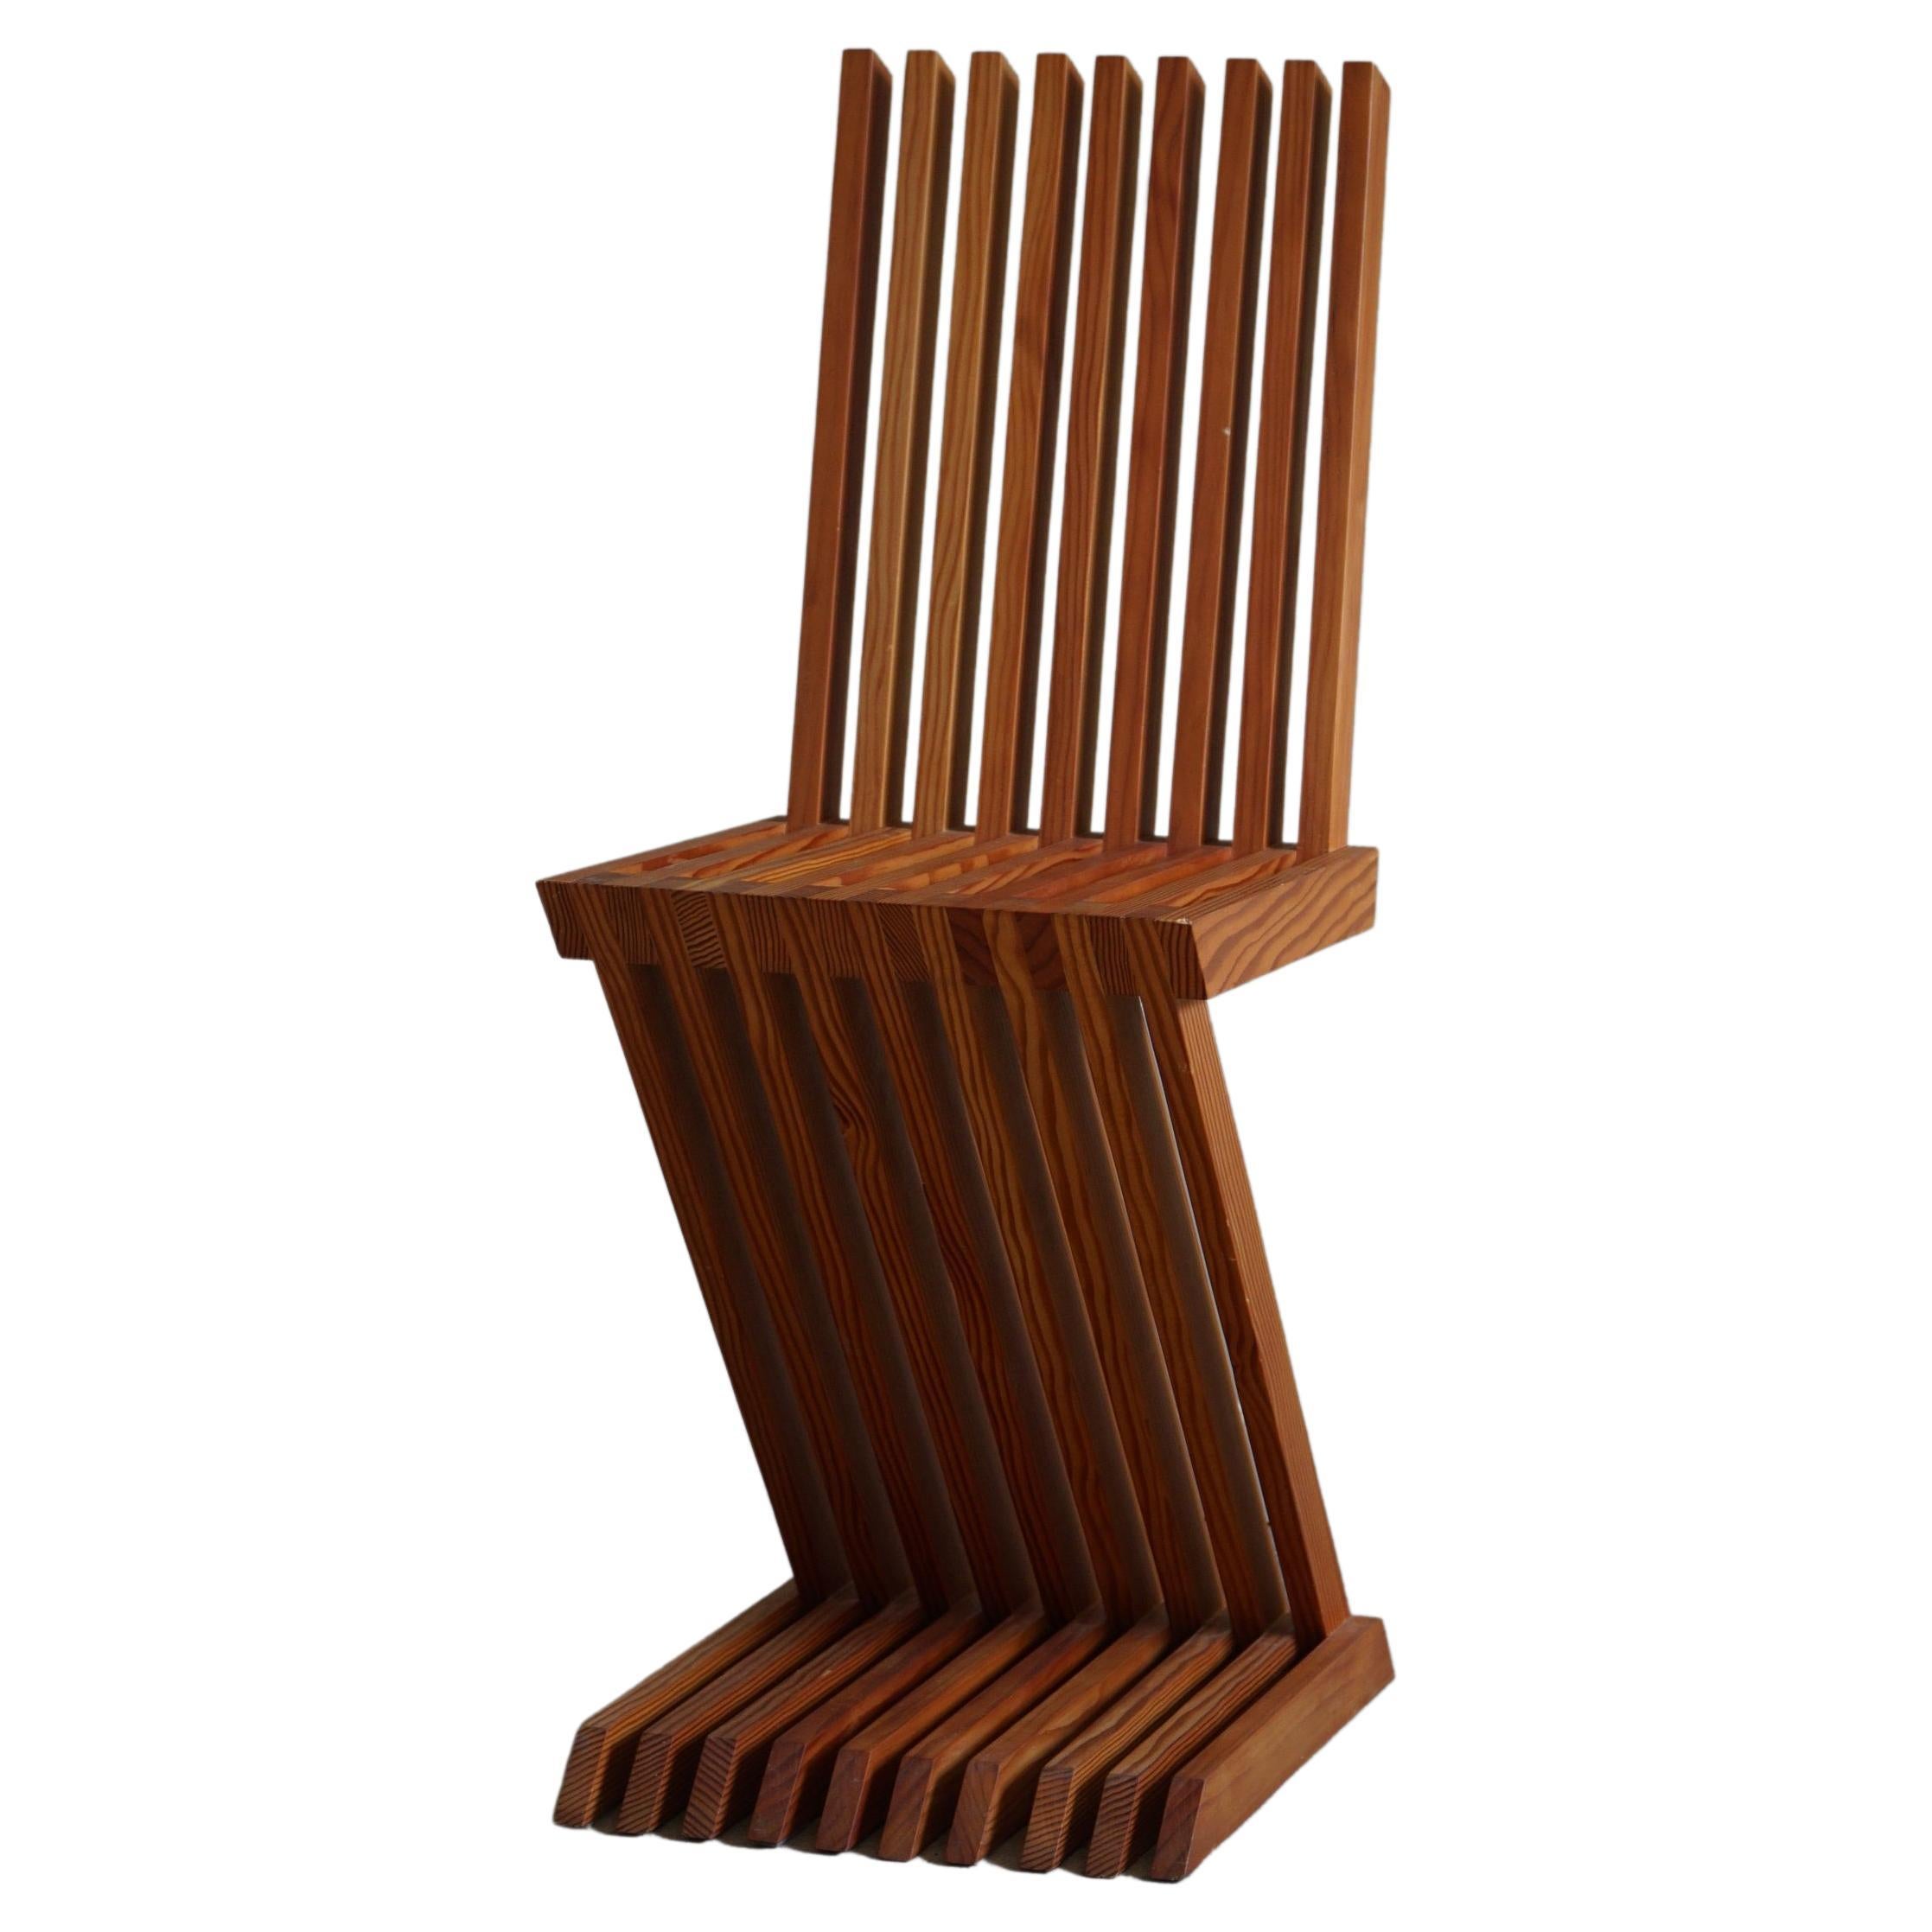 Handcrafted Sculptural Zig Zag Chair Made in Solid Pine, Scandinavian Modern